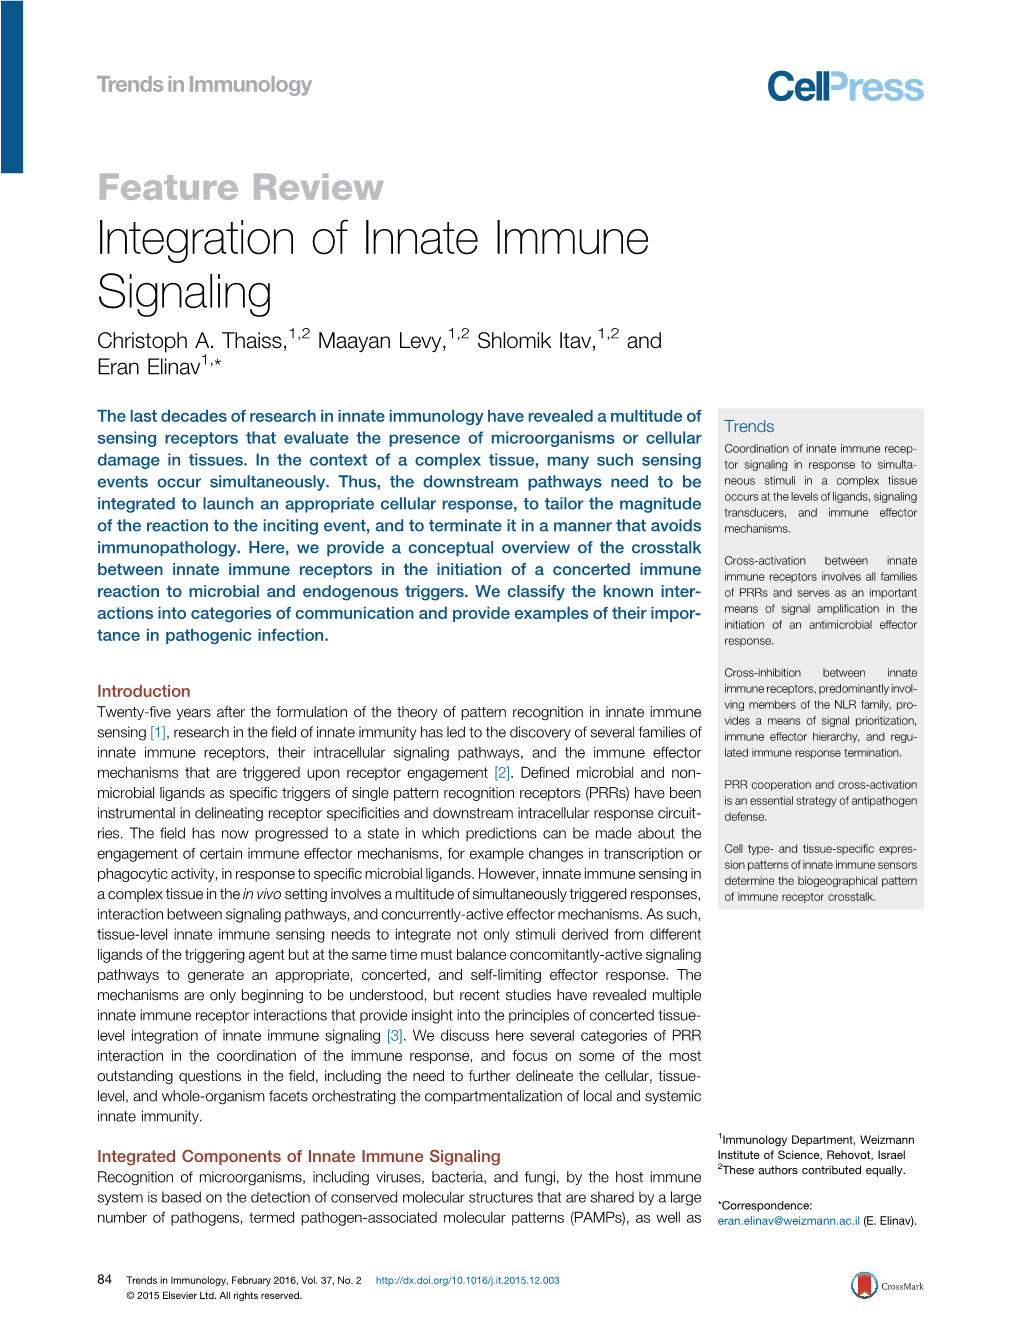 Integration of Innate Immune Signaling